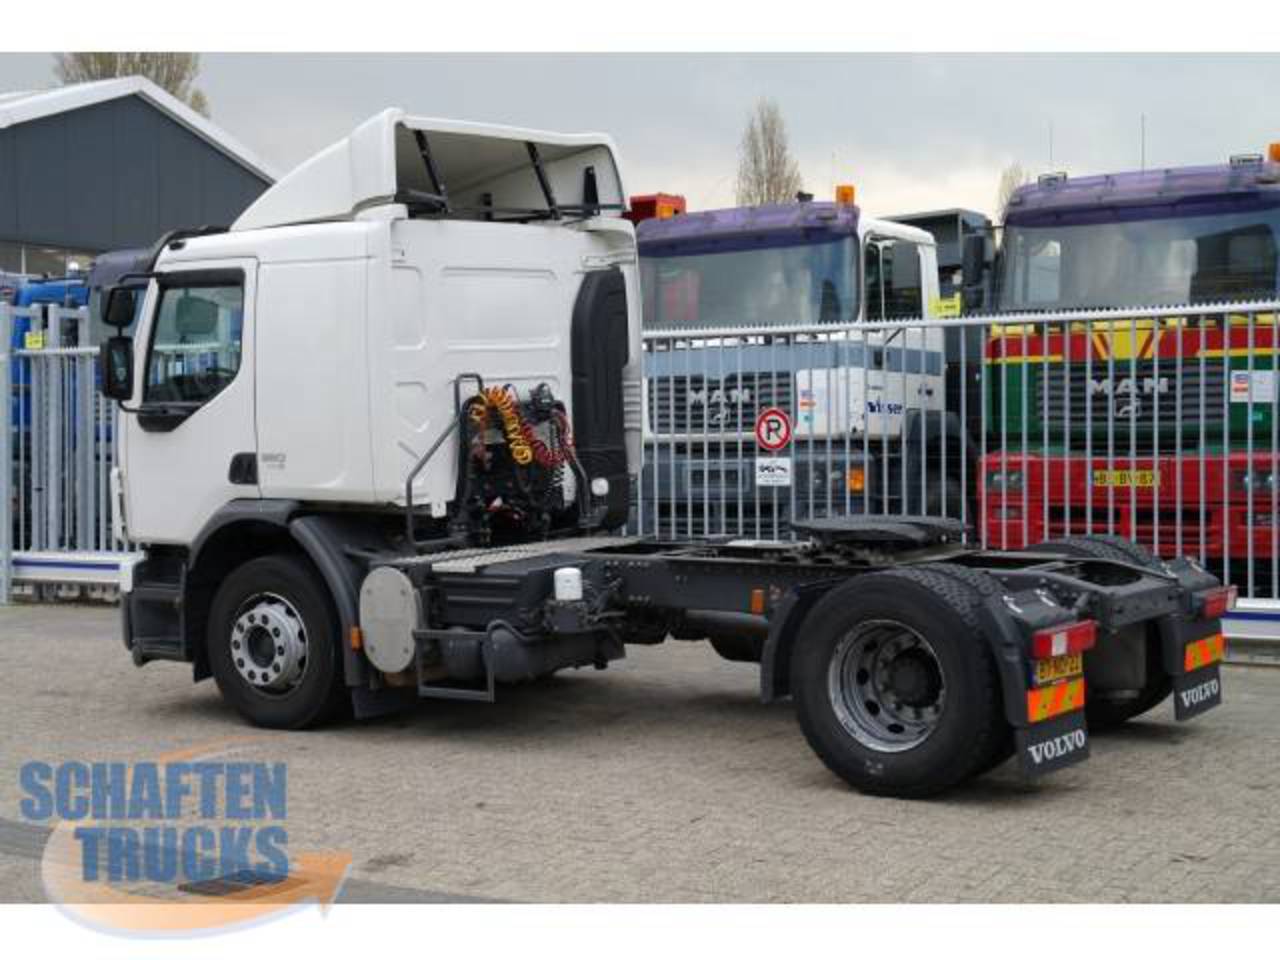 Schaften trucks - Trucks - Other - Volvo - FE 320 EURO 5 MANUAL GEARBOX